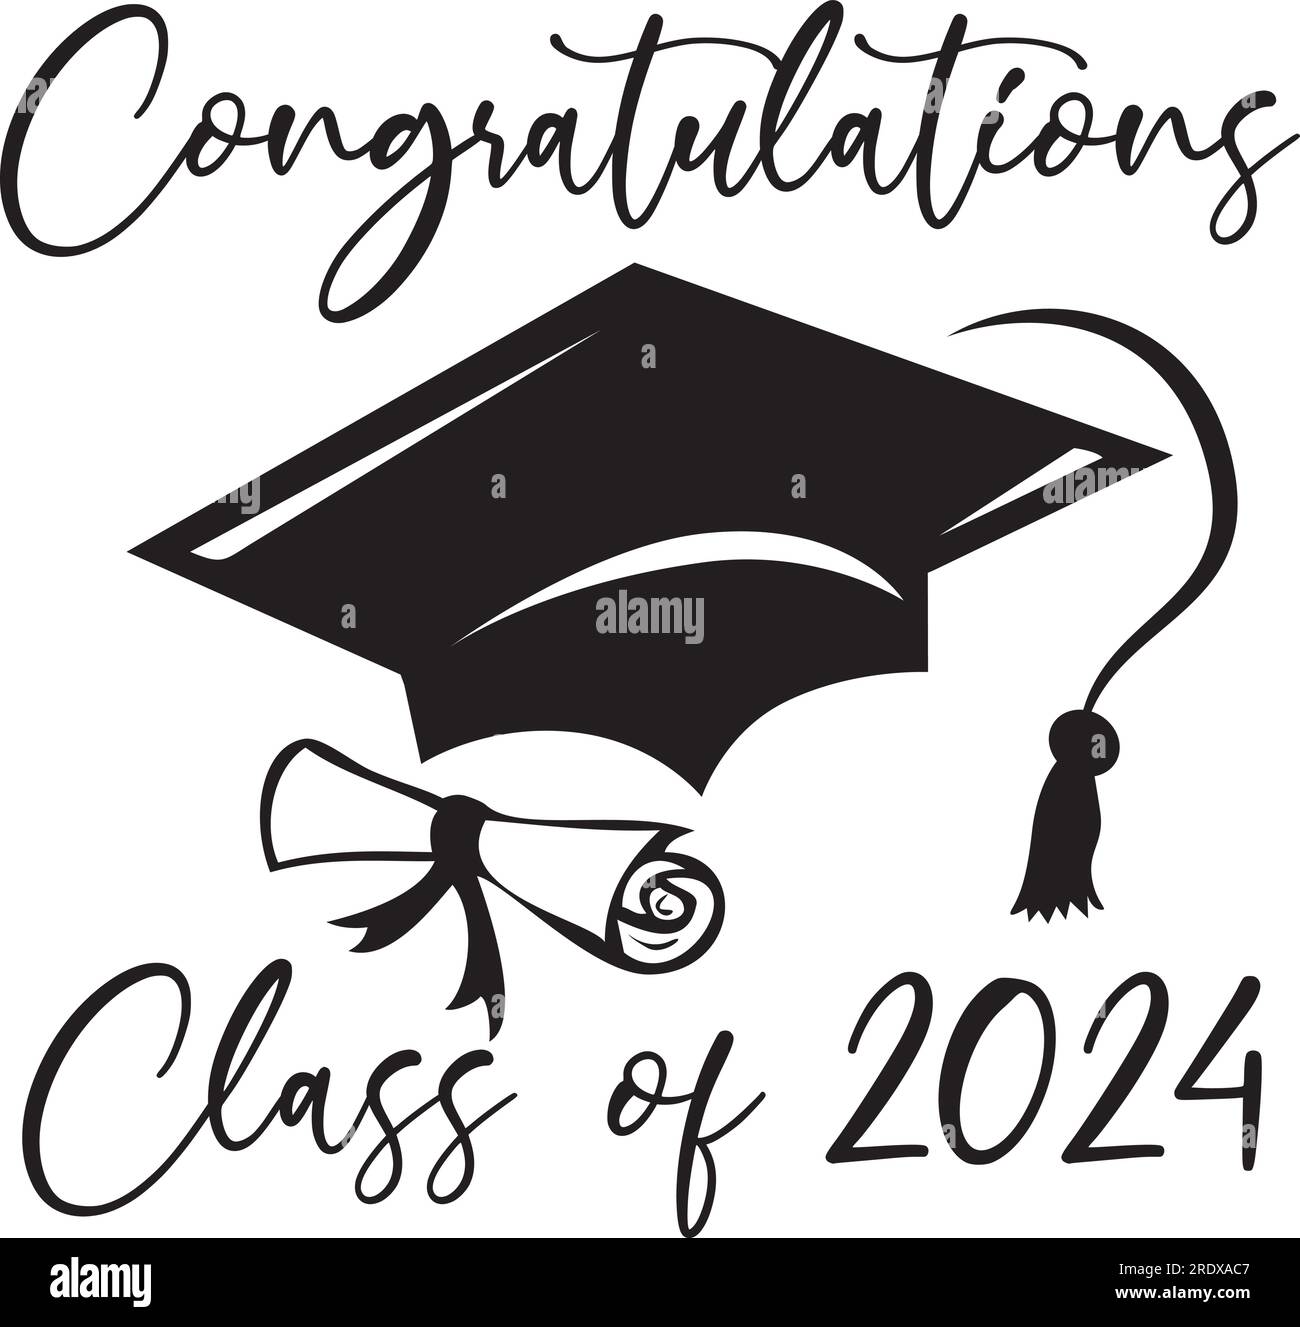 Congratulations Class of 2024 Graduation Cap and Diploma Design Stock Vector